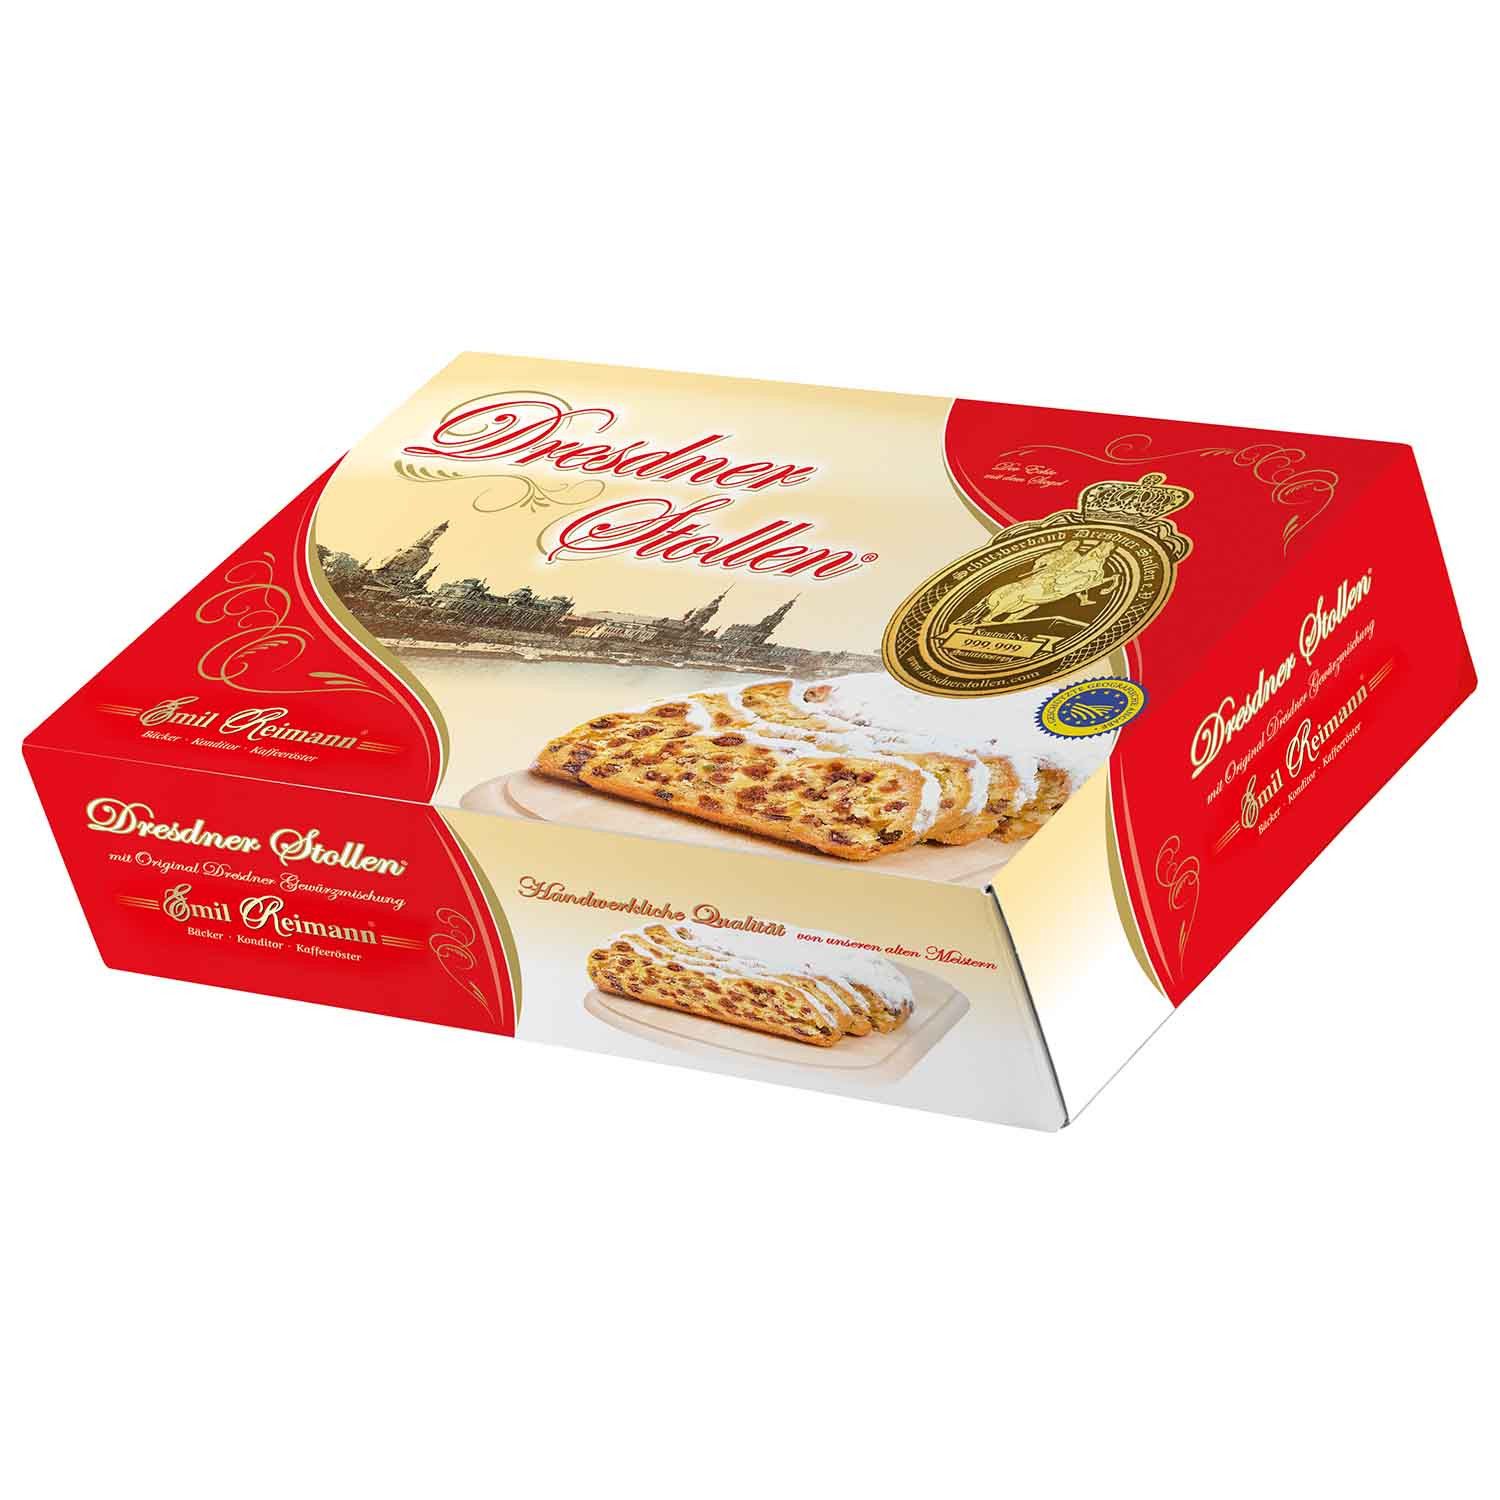  Dresdner Stollen Edition Frauenkirche im Geschenkkarton - Christmas fruit bread in gift box 1000g - Bánh Giáng Sinh truyền thống Dresden 